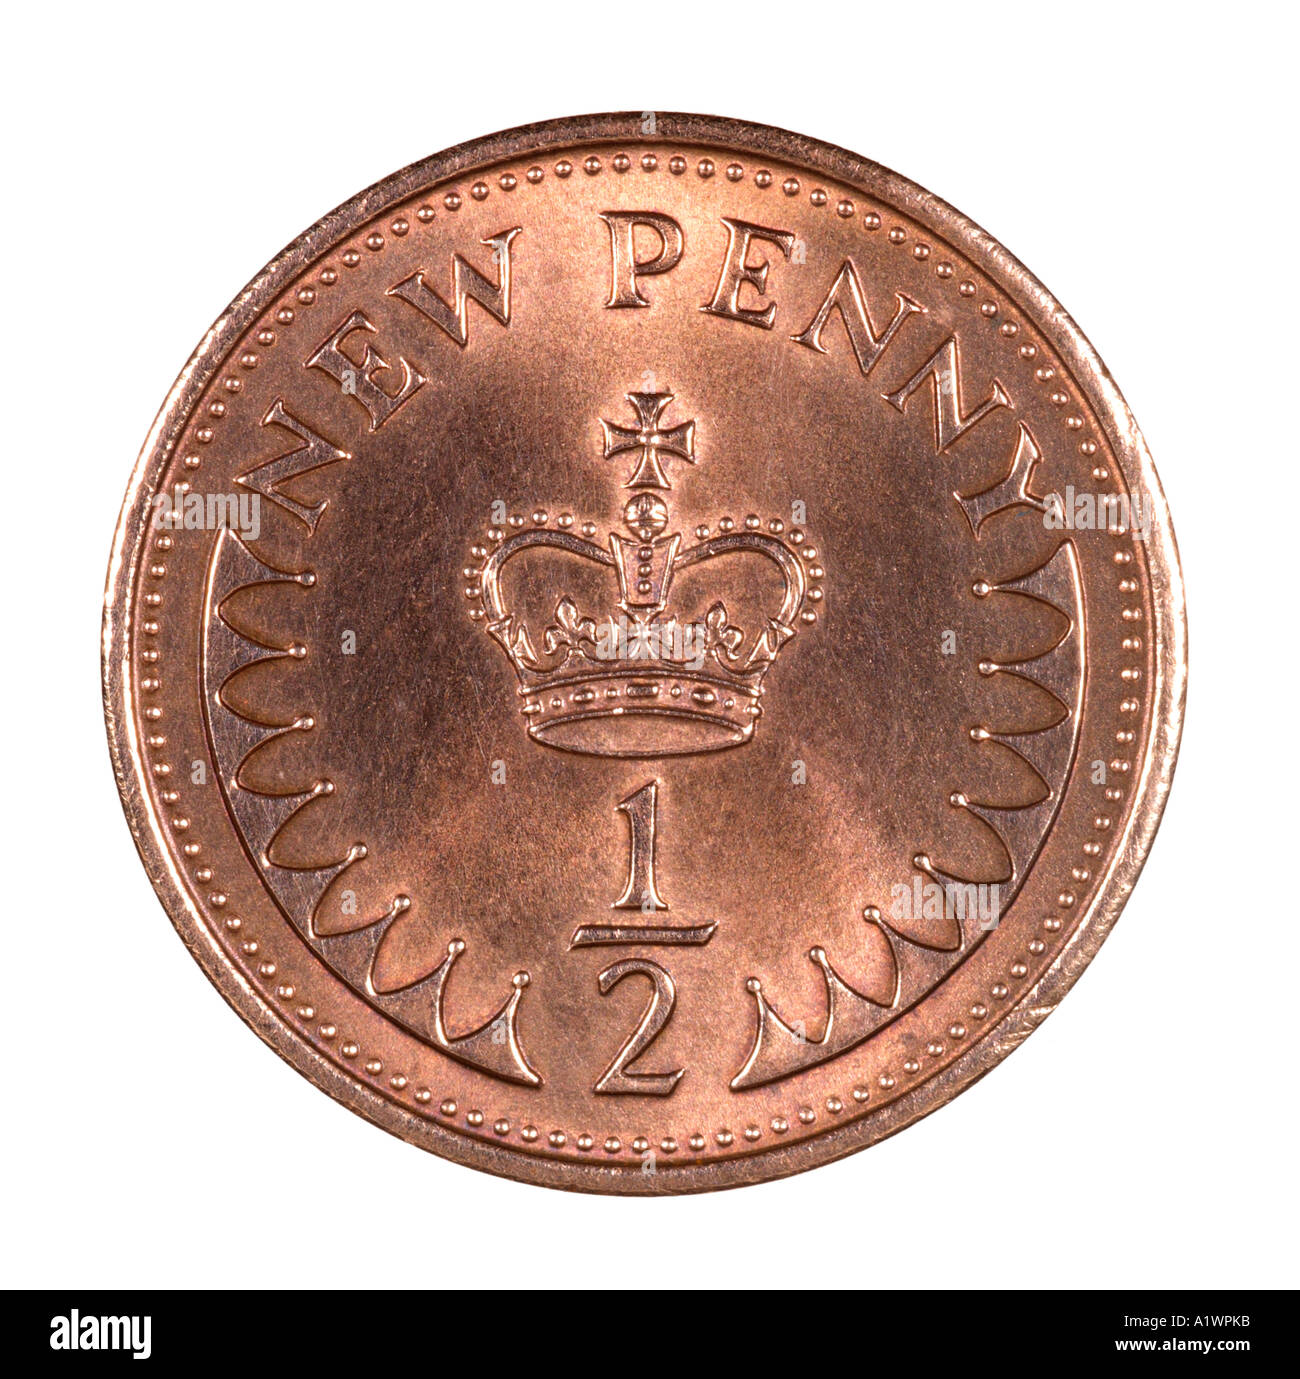 Queen Elizabeth 2 II Reg Regina metà decimale pence P crown Foto Stock